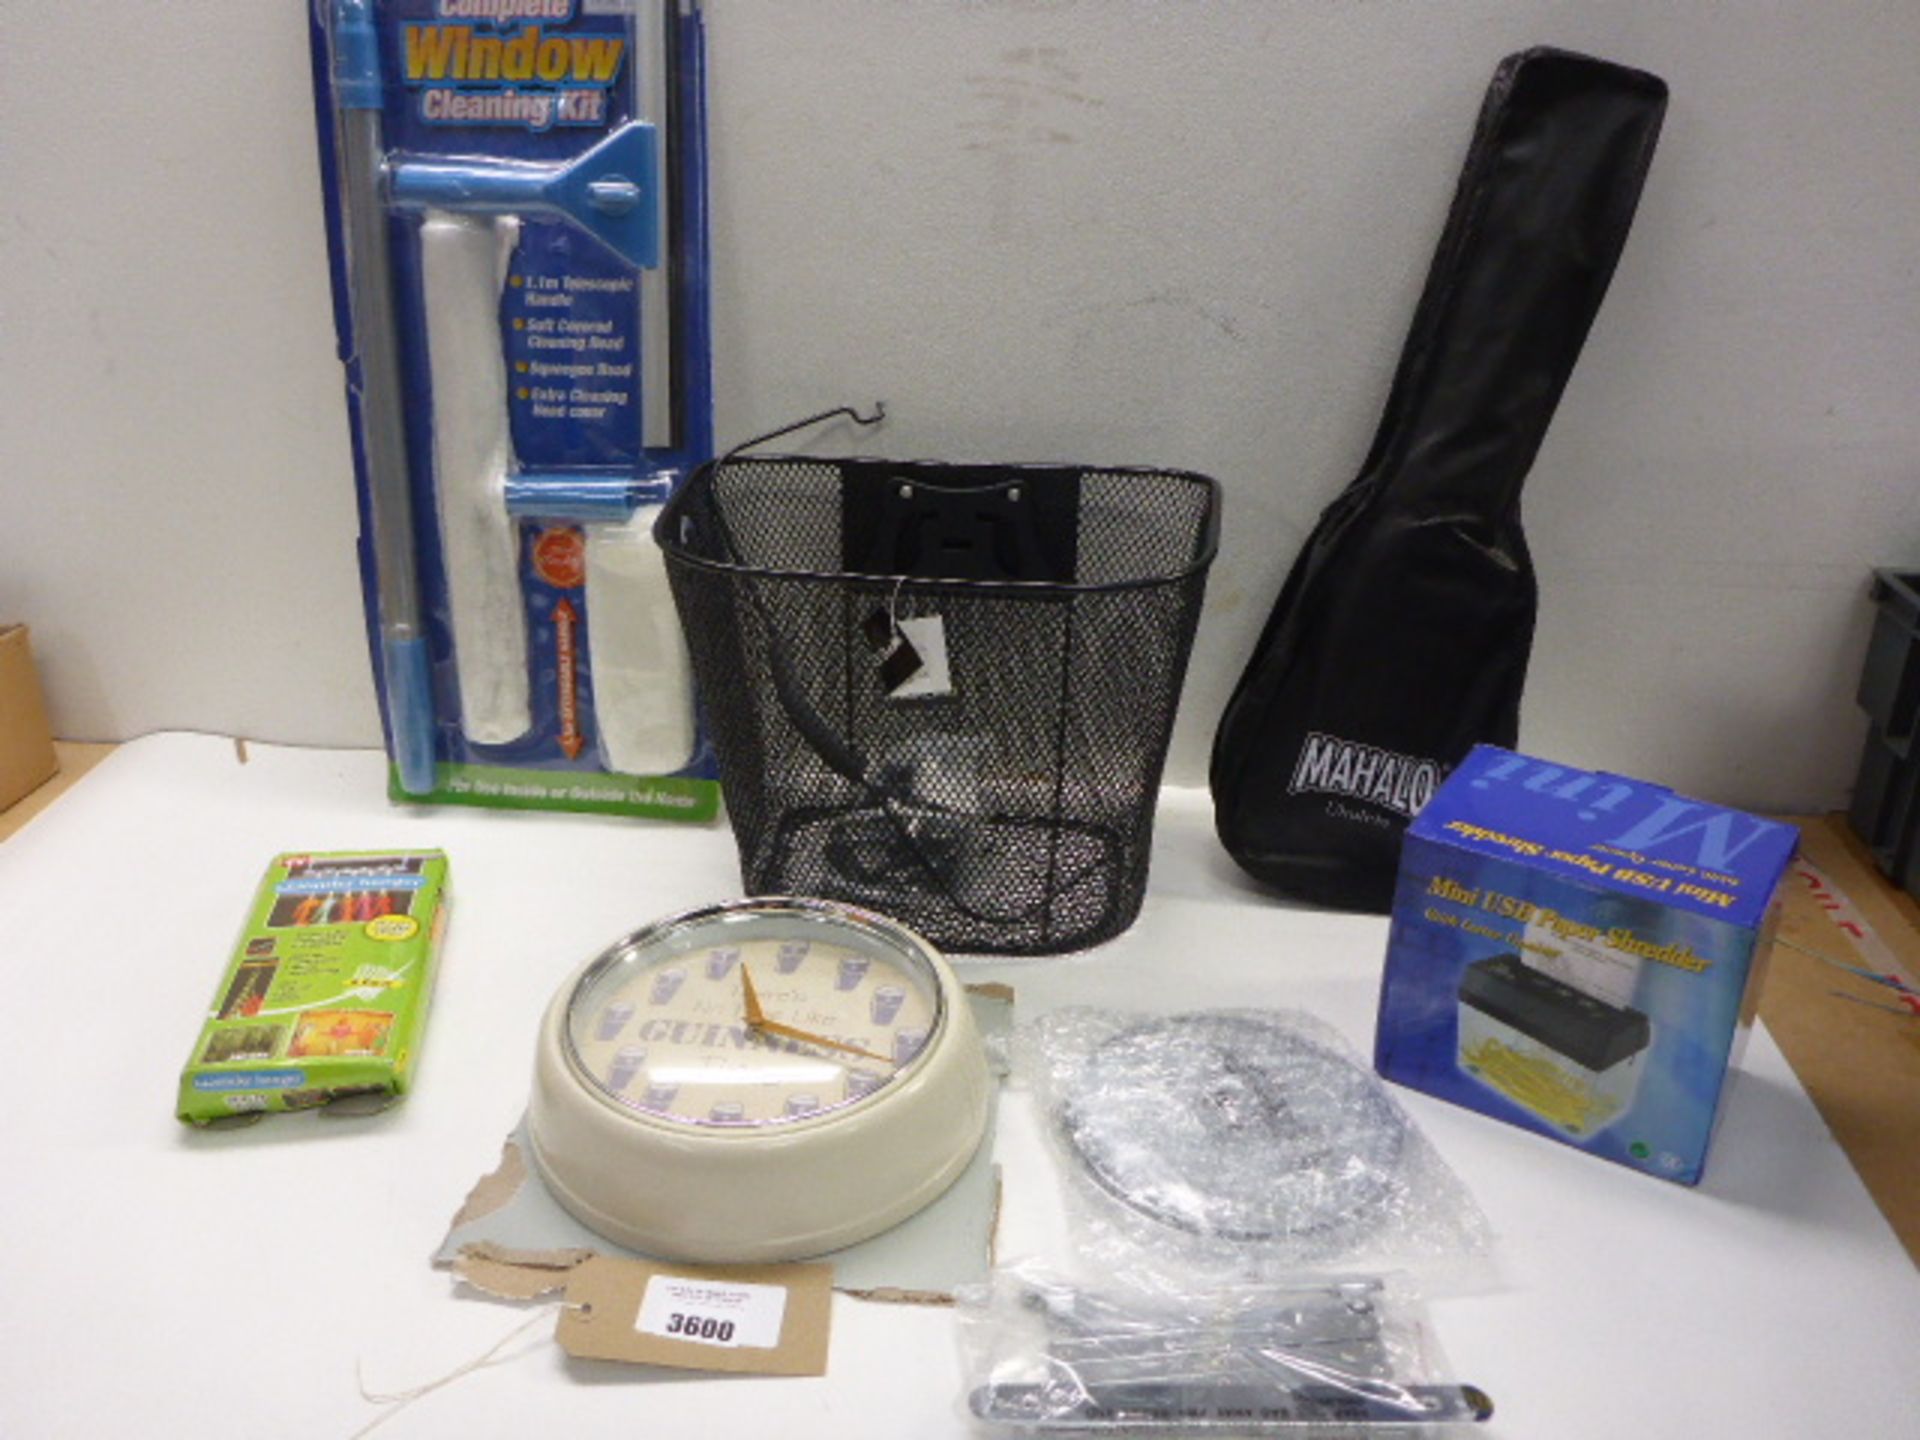 Ukulele, Pedal Pro bike basket, window cleaning kit, wall clock, bathroom mirror, mini paper